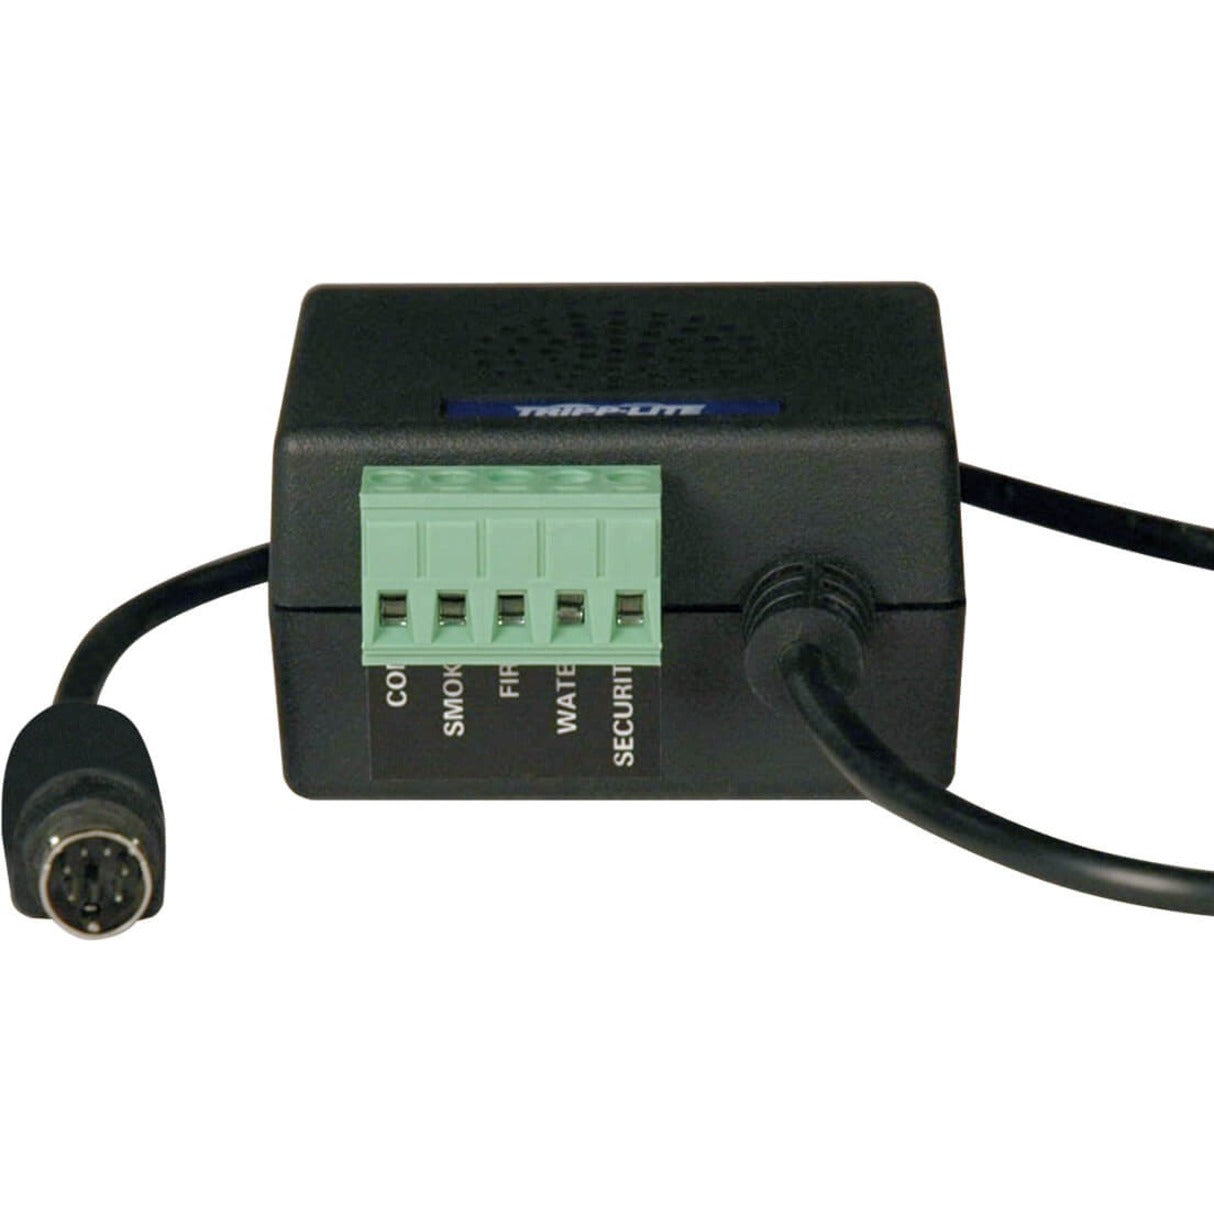 Tripp Lite ENVIROSENSE Environmental Sensor - Remote Temperature & Humidity Monitoring, SNMP Card Compatible